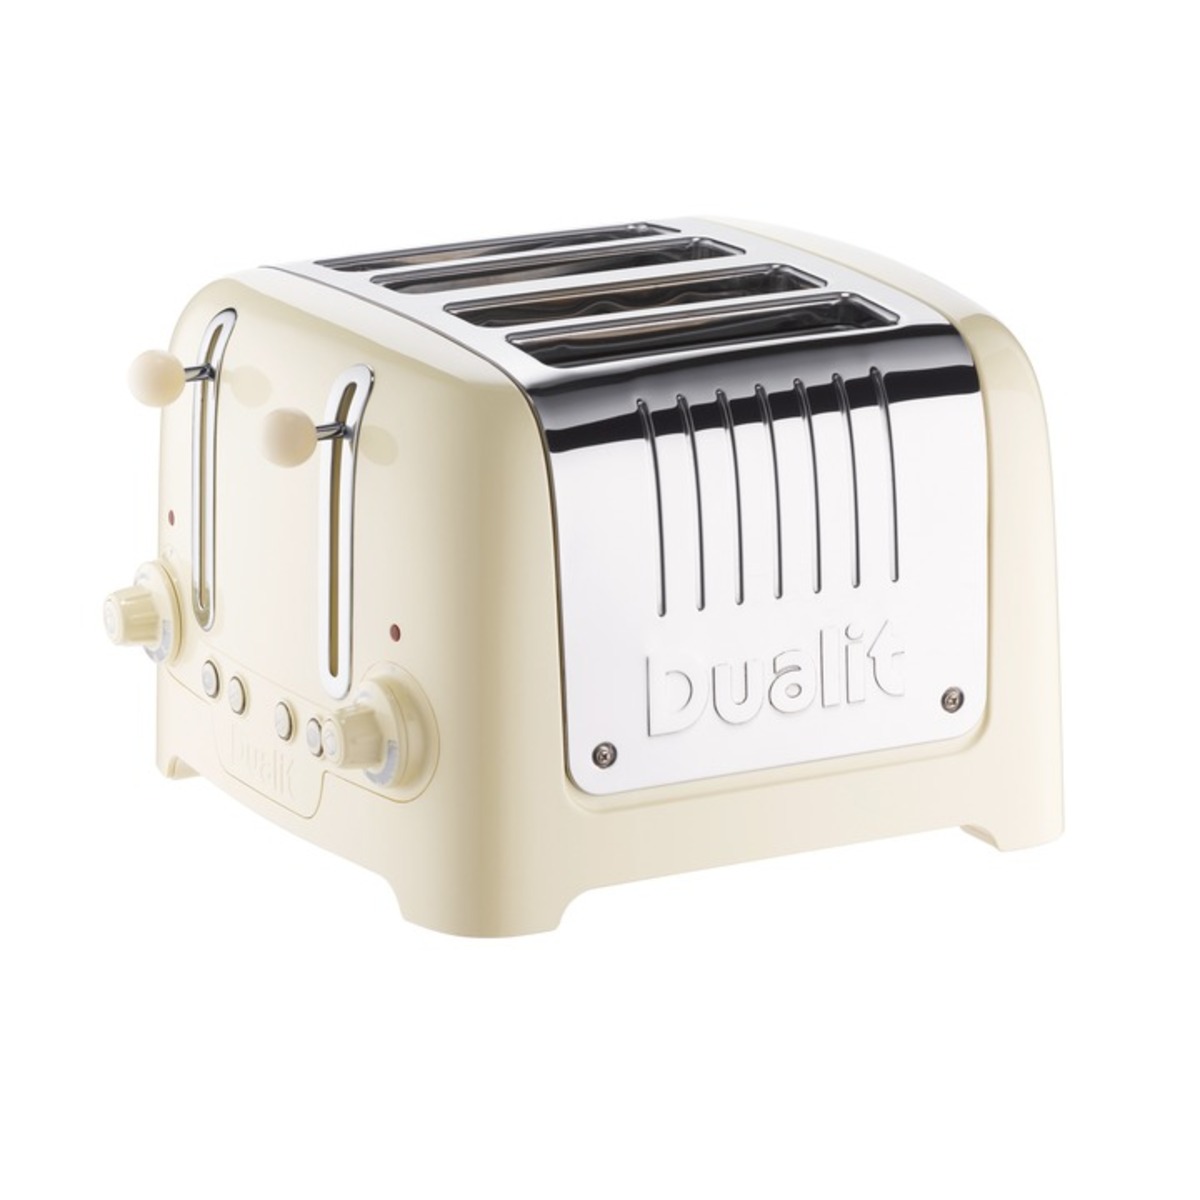 Dualit 46202 4 Slot Lite Toaster, Gloss Cream